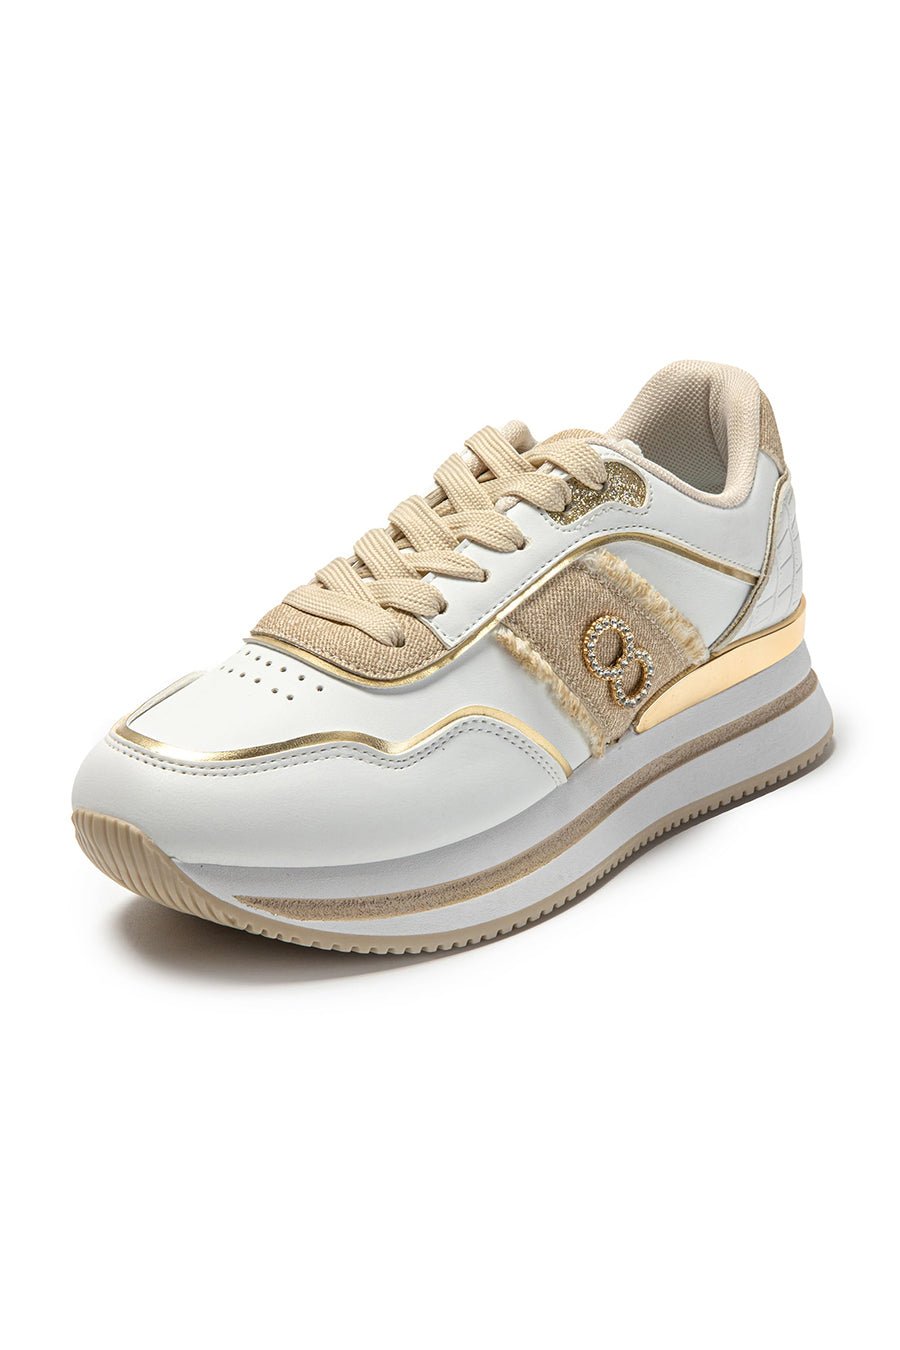 JOMIX Sneakers Donna Casual Scarpe Eleganti Sportive Comode da Camminata SD9384